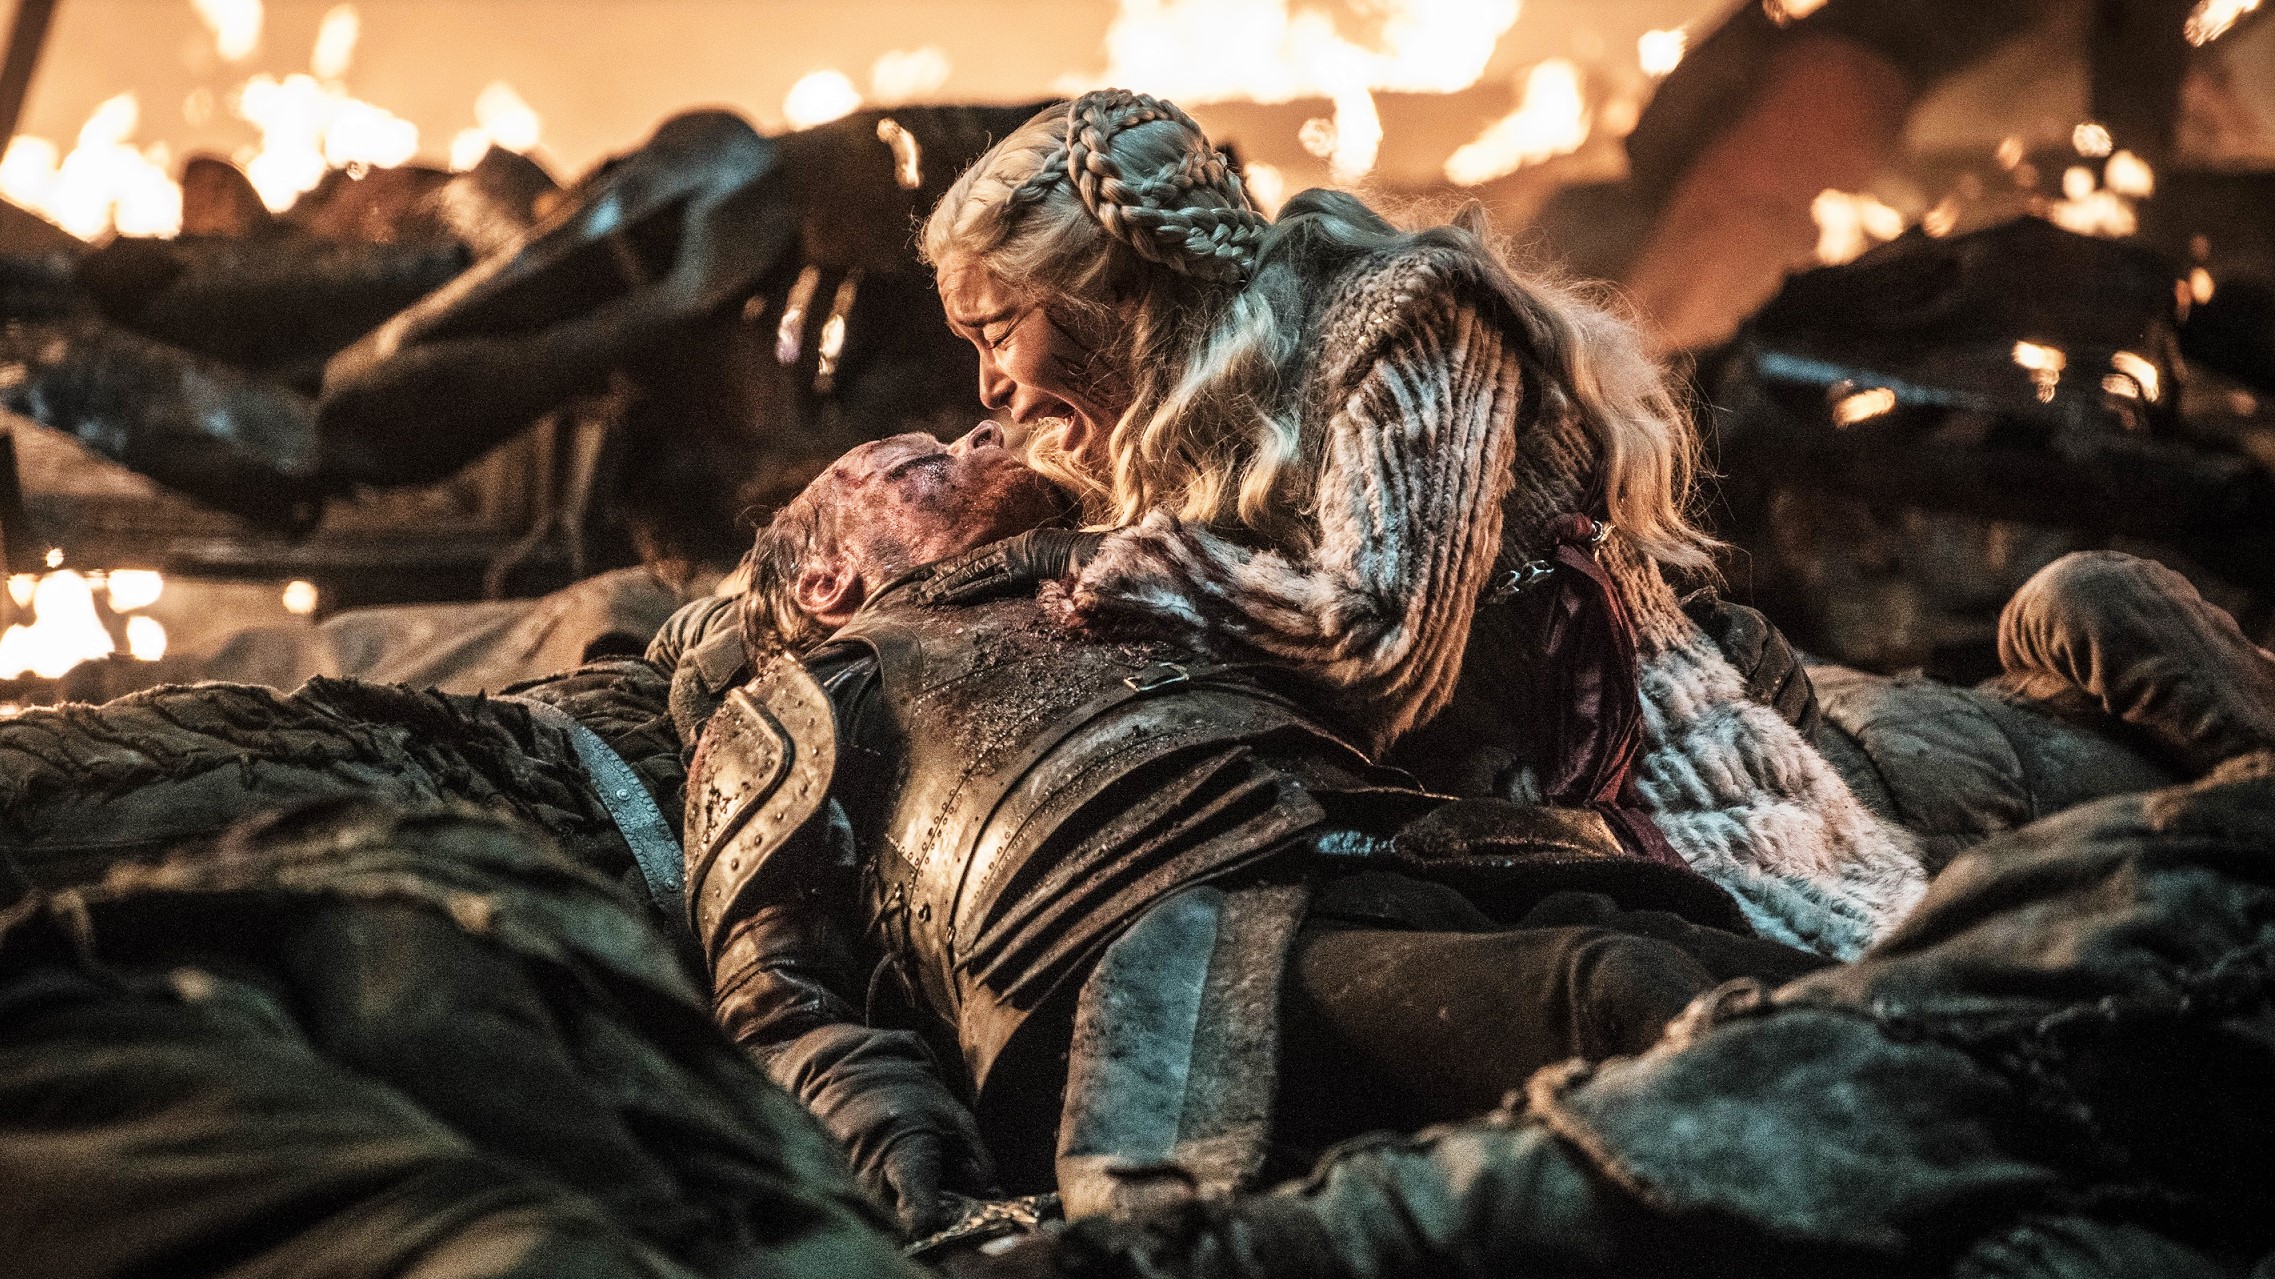 Daenerys Dany Targaryen Jorah Mormont Season 8 803 The Long Night Header Zoomed In